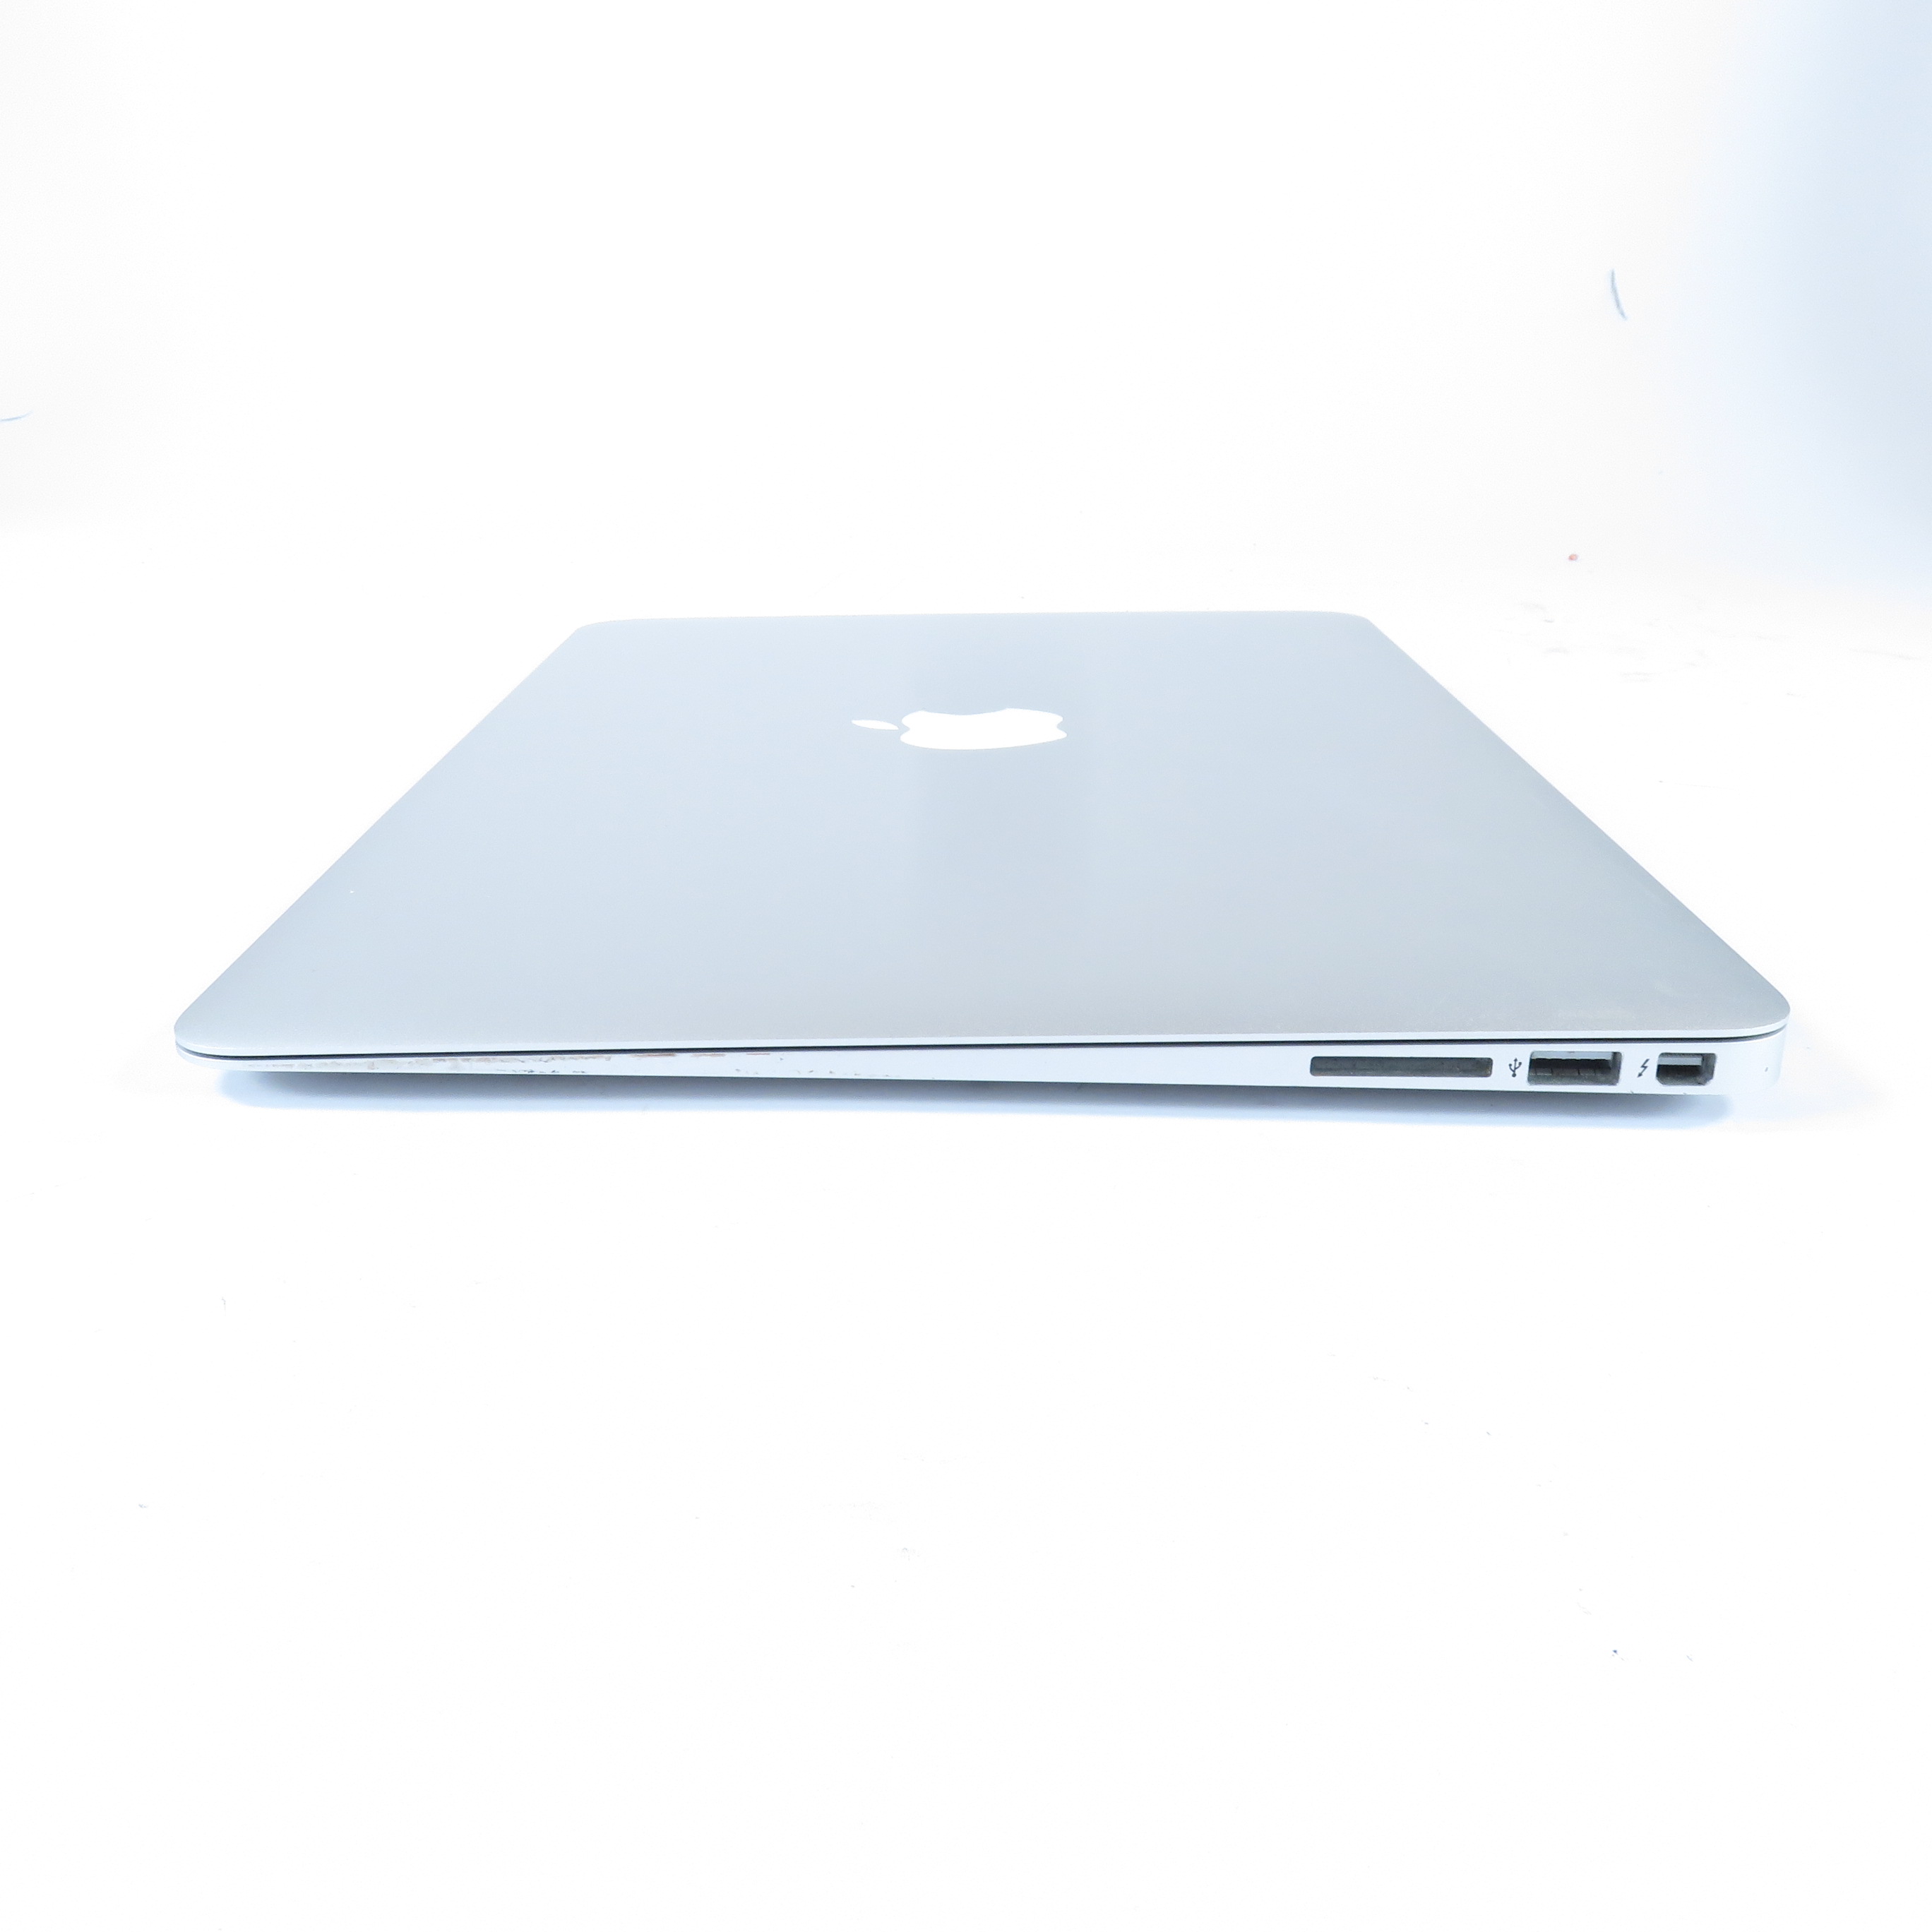 Apple MacBook Air 2015 MJVE2LL/A Core i5-5250U 1.6GHz 8GB RAM